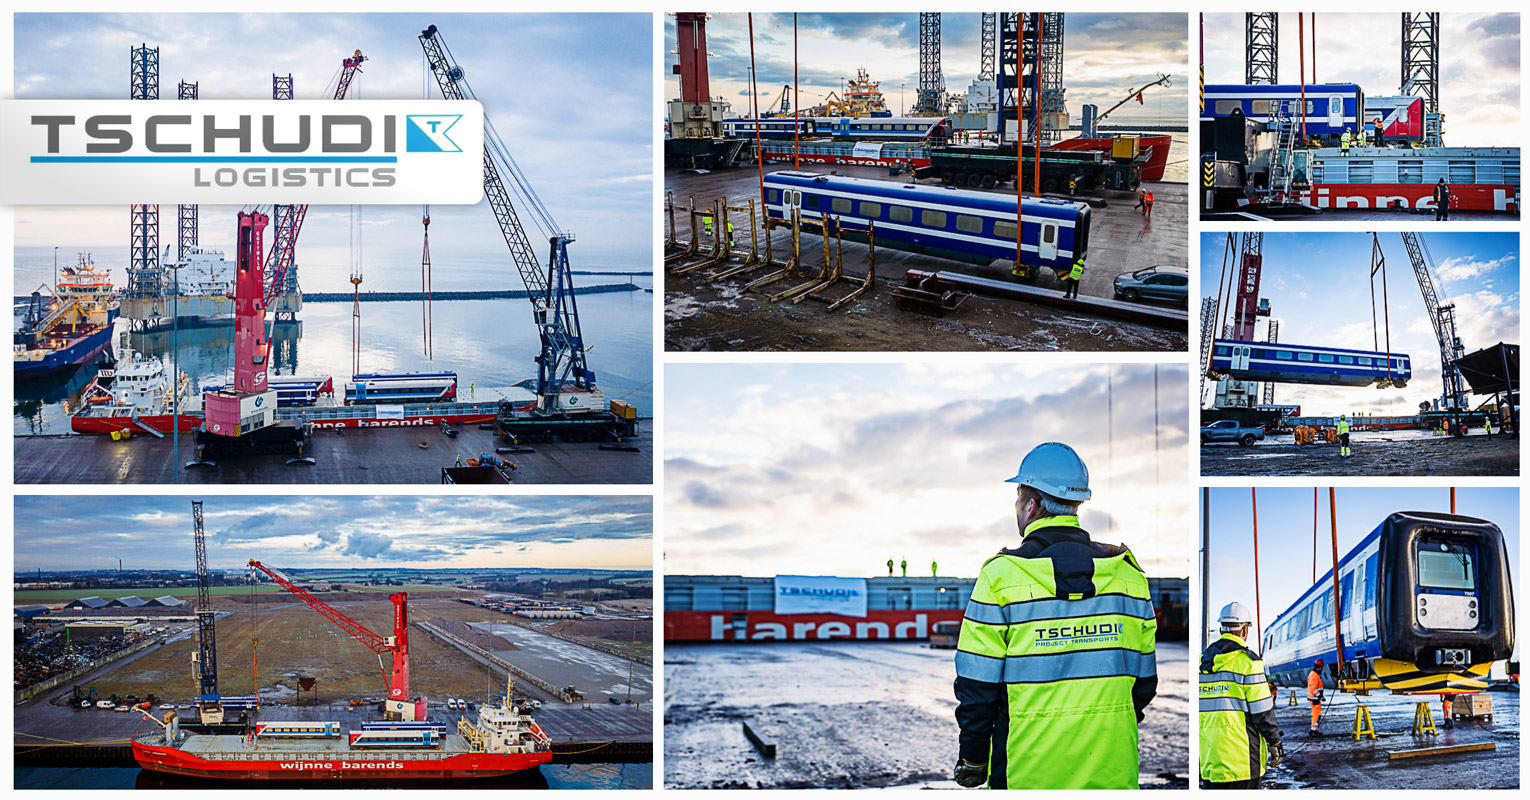 Tschudi has been Discharging Train Sets for DSB (The Danish State Railways) in the Port of Grenaa